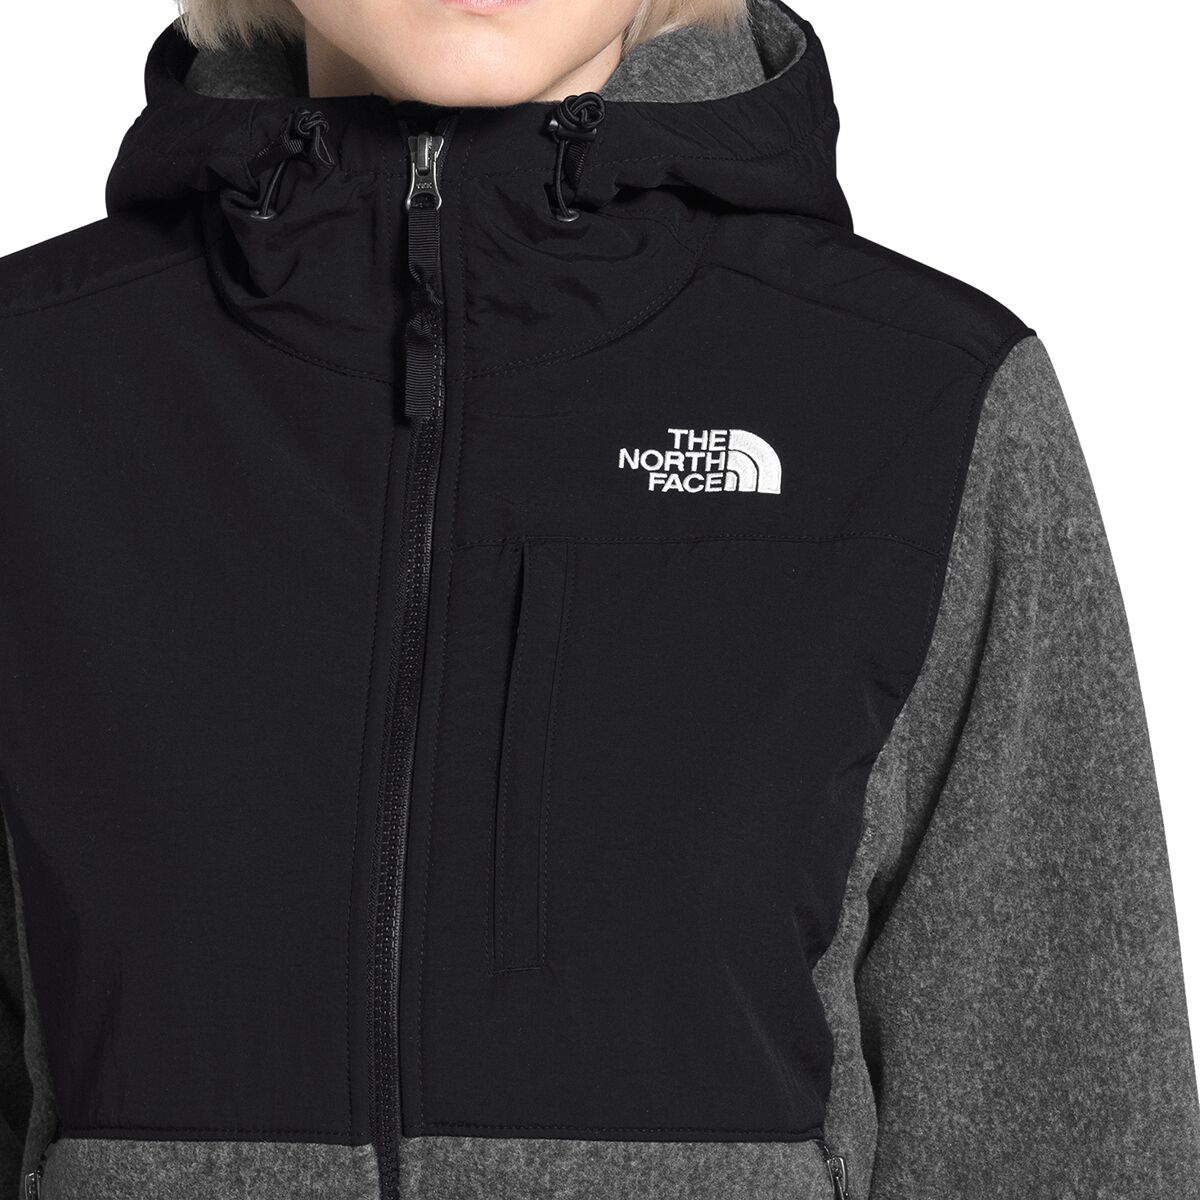 The North Face Denali 2 Hooded Fleece Jacket - Women's | Backcountry.com